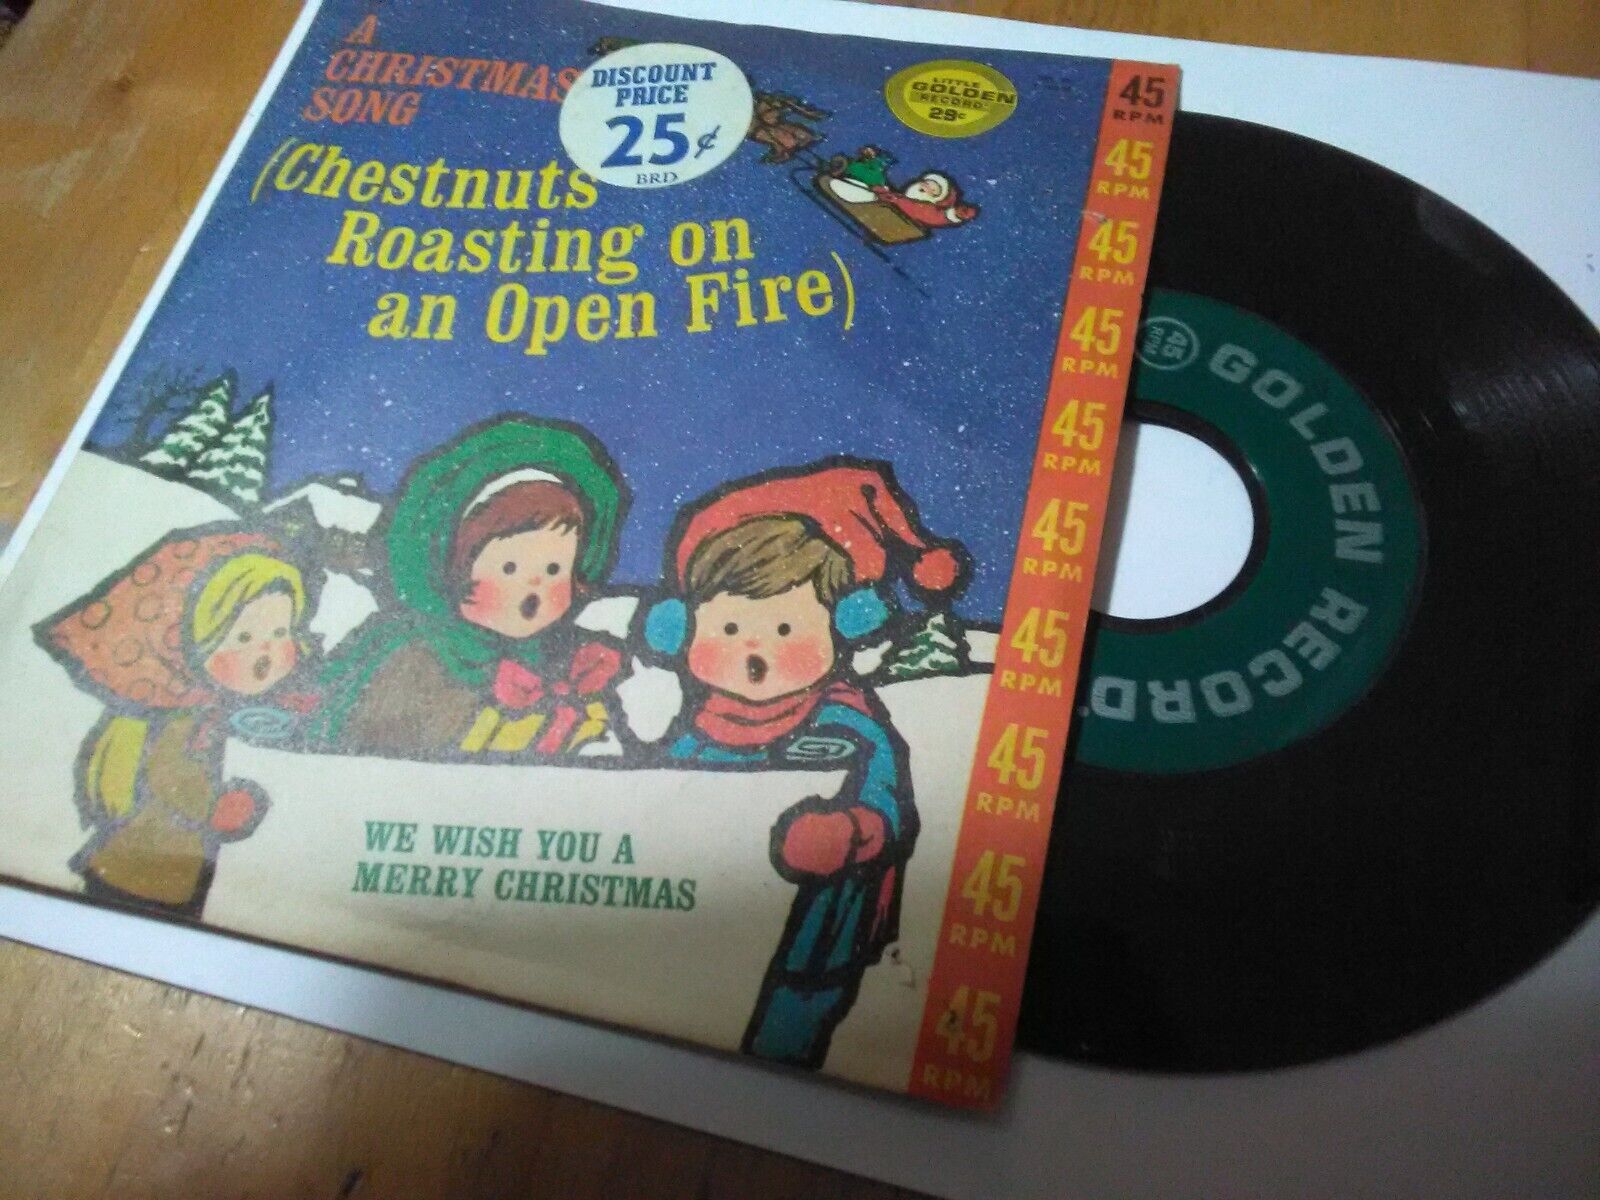 LITTLE GOLDEN RECORD 731 CHRISTMAS SONG (CHESTNUTS ROASTING ON THE FIRE) VTG